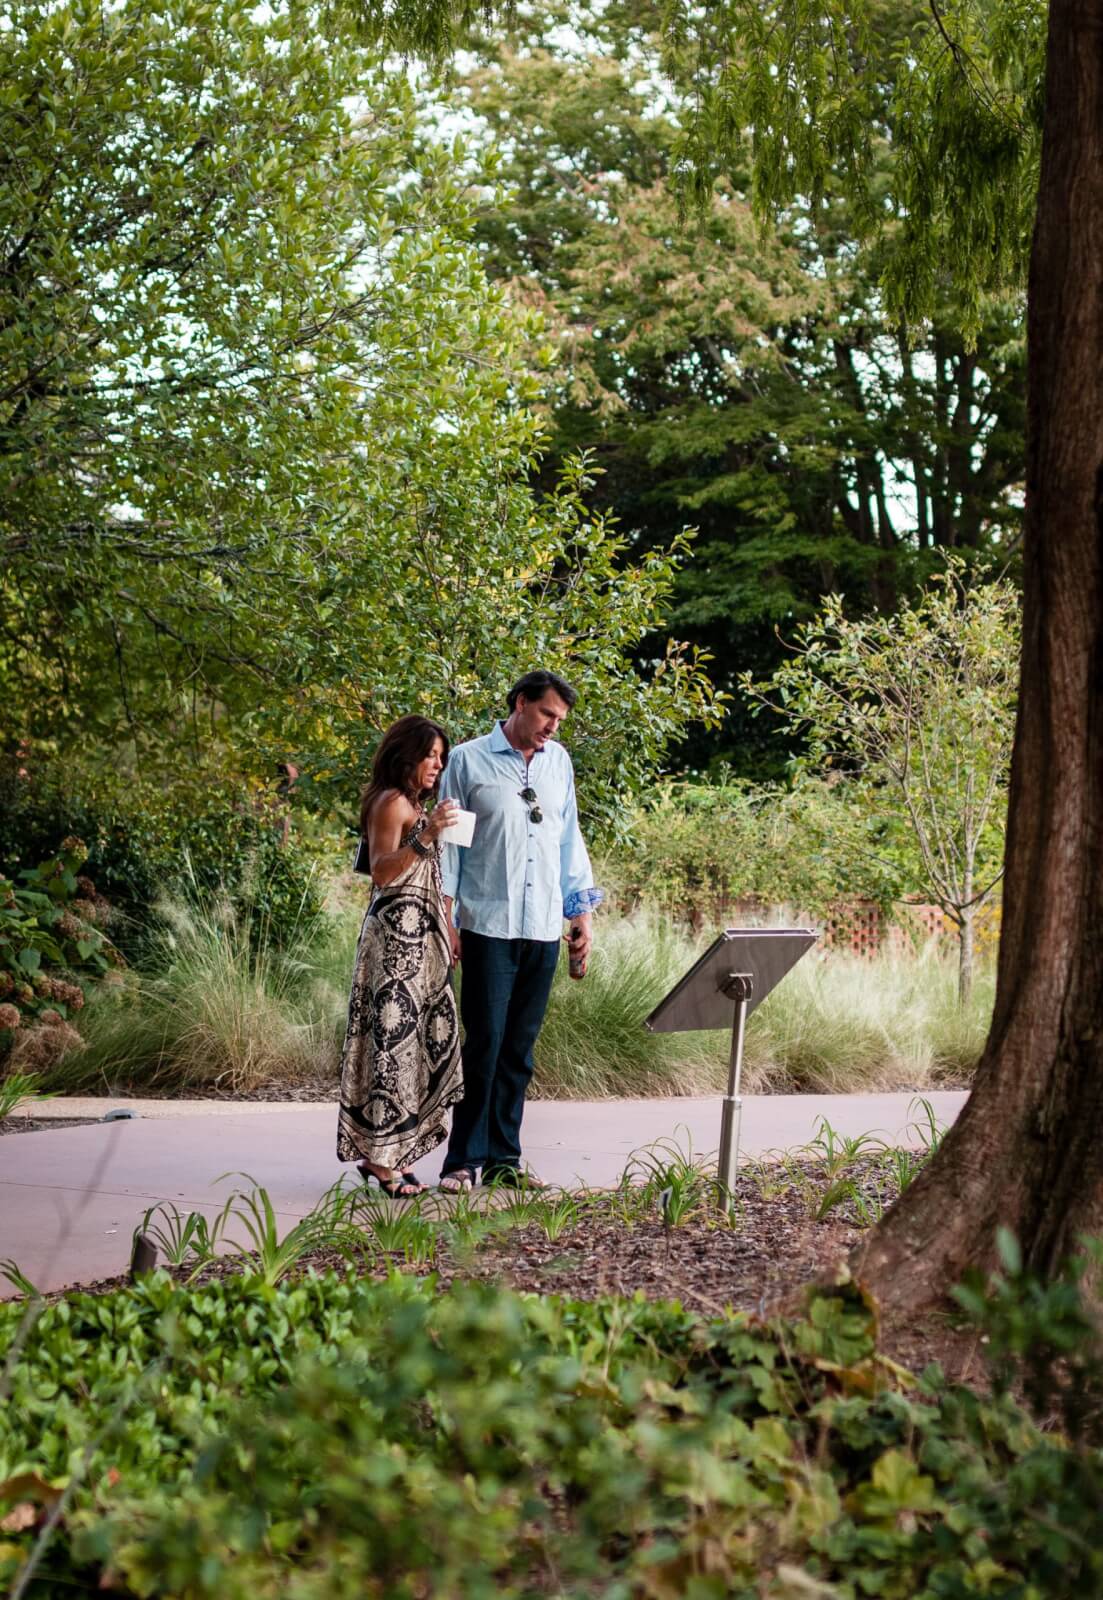 Atlanta Botanical Garden offers romantic spots for a proposal